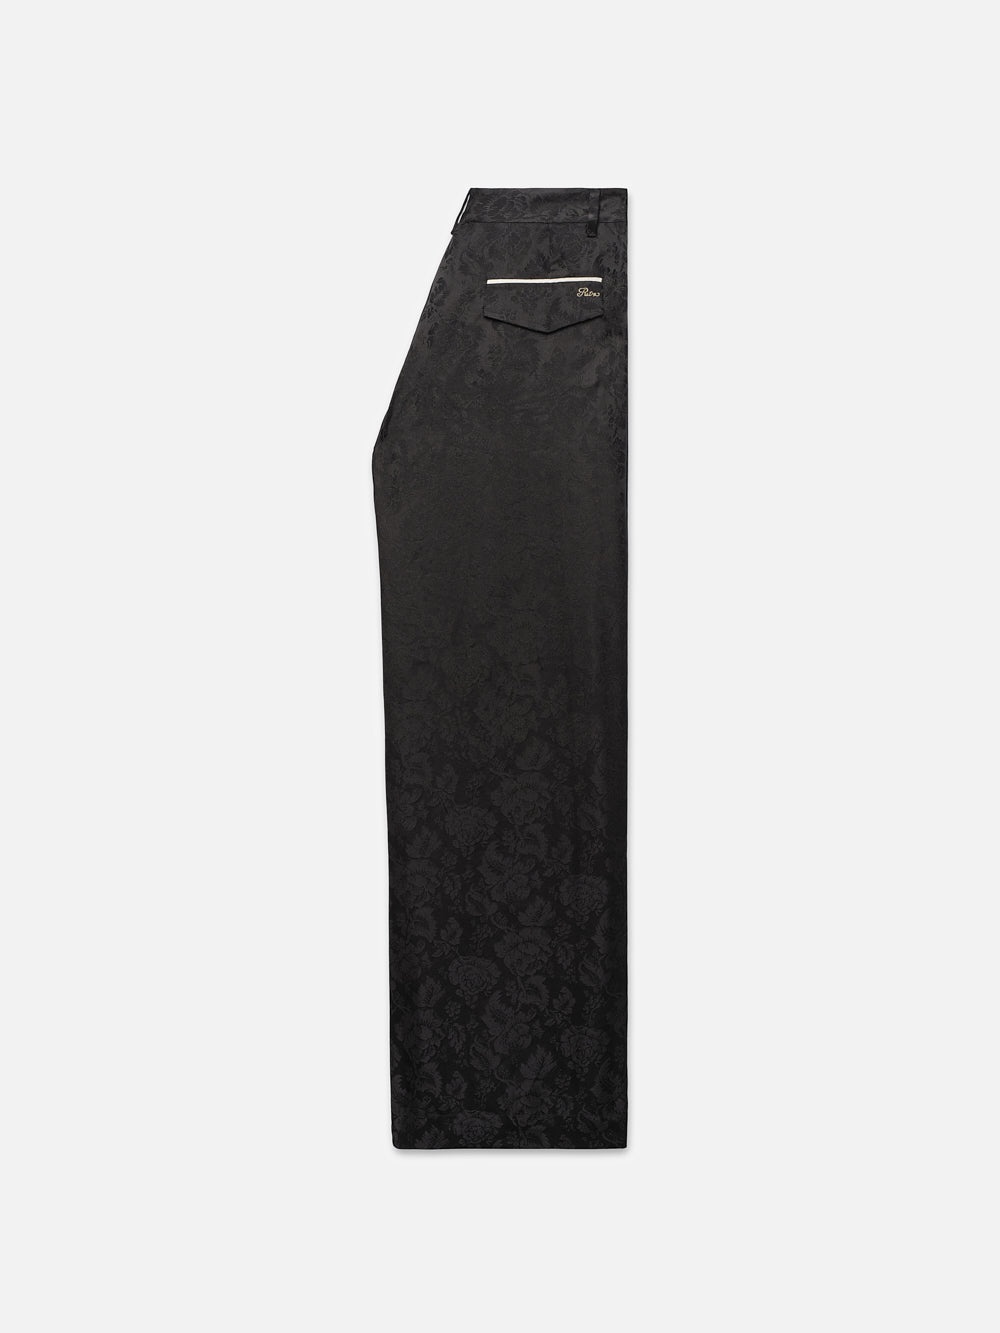 Ritz Women's Pajama Trouser in Black Multi - 4